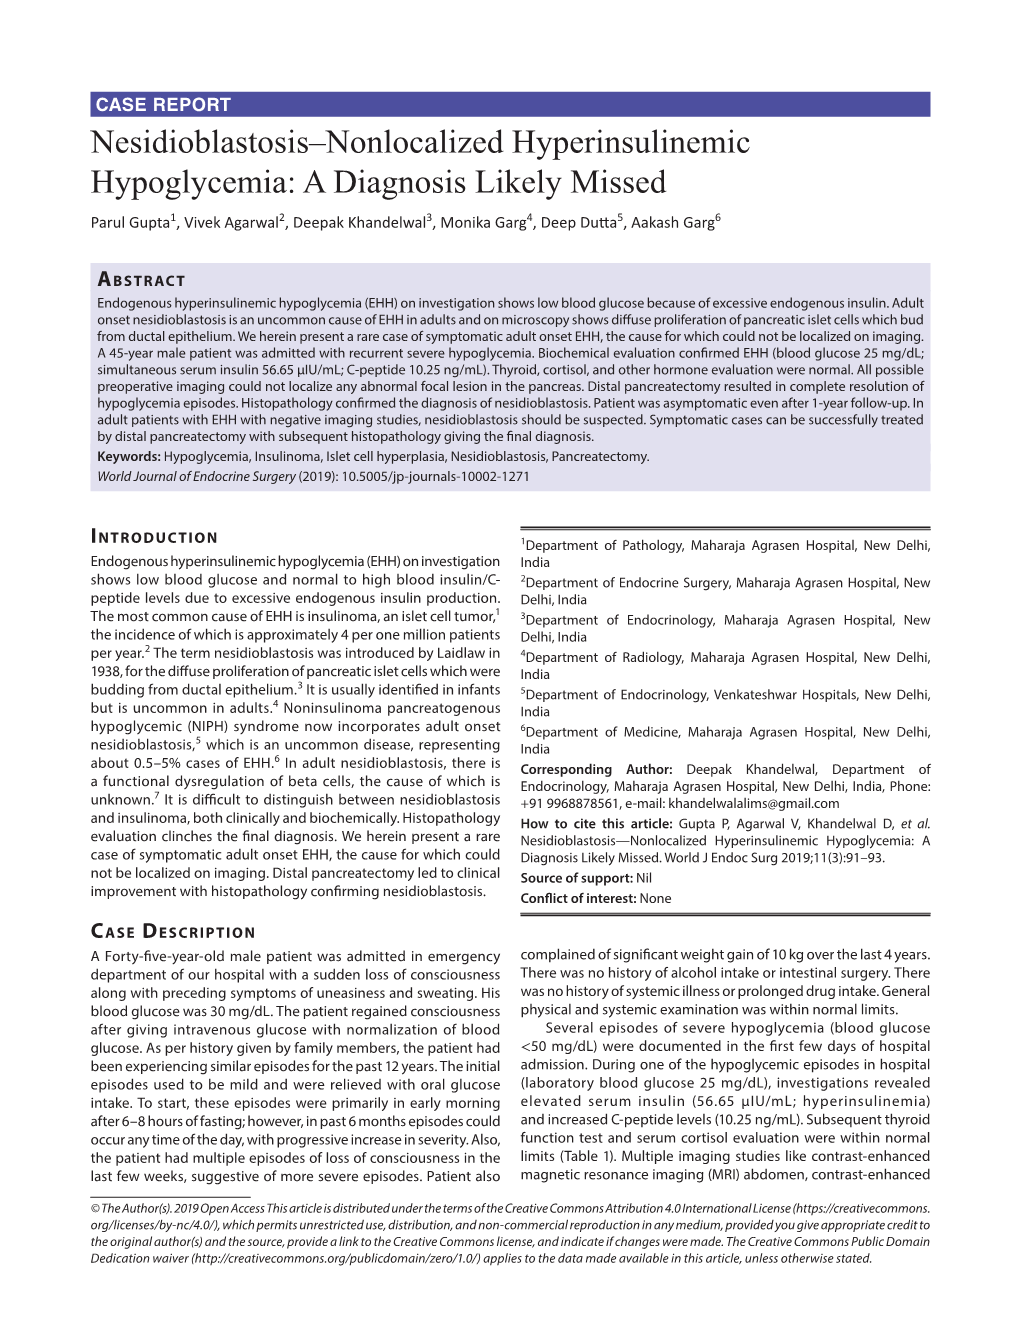 Nesidioblastosis–Nonlocalized Hyperinsulinemic Hypoglycemia